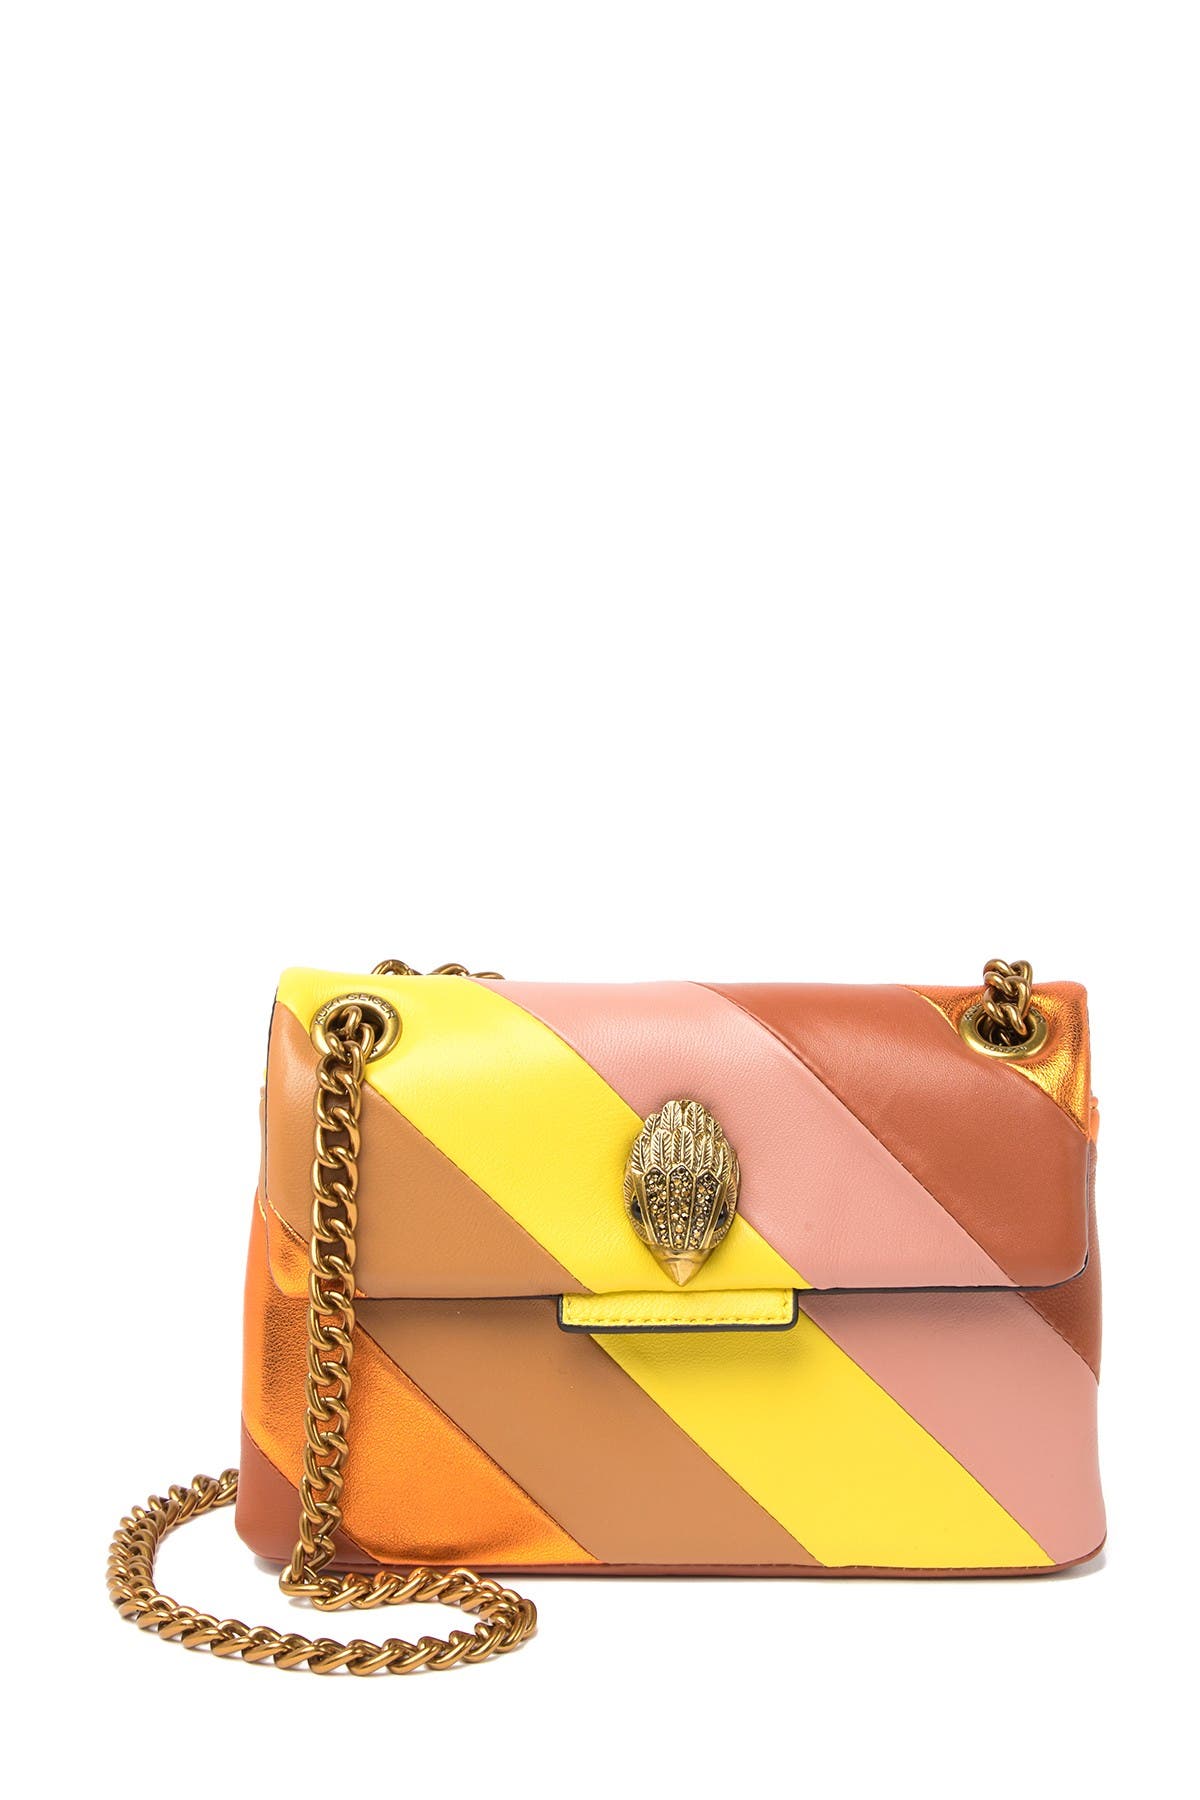 KG by KURT GEIGER | Leather Mini Kensington Rainbow Shoulder Bag ...